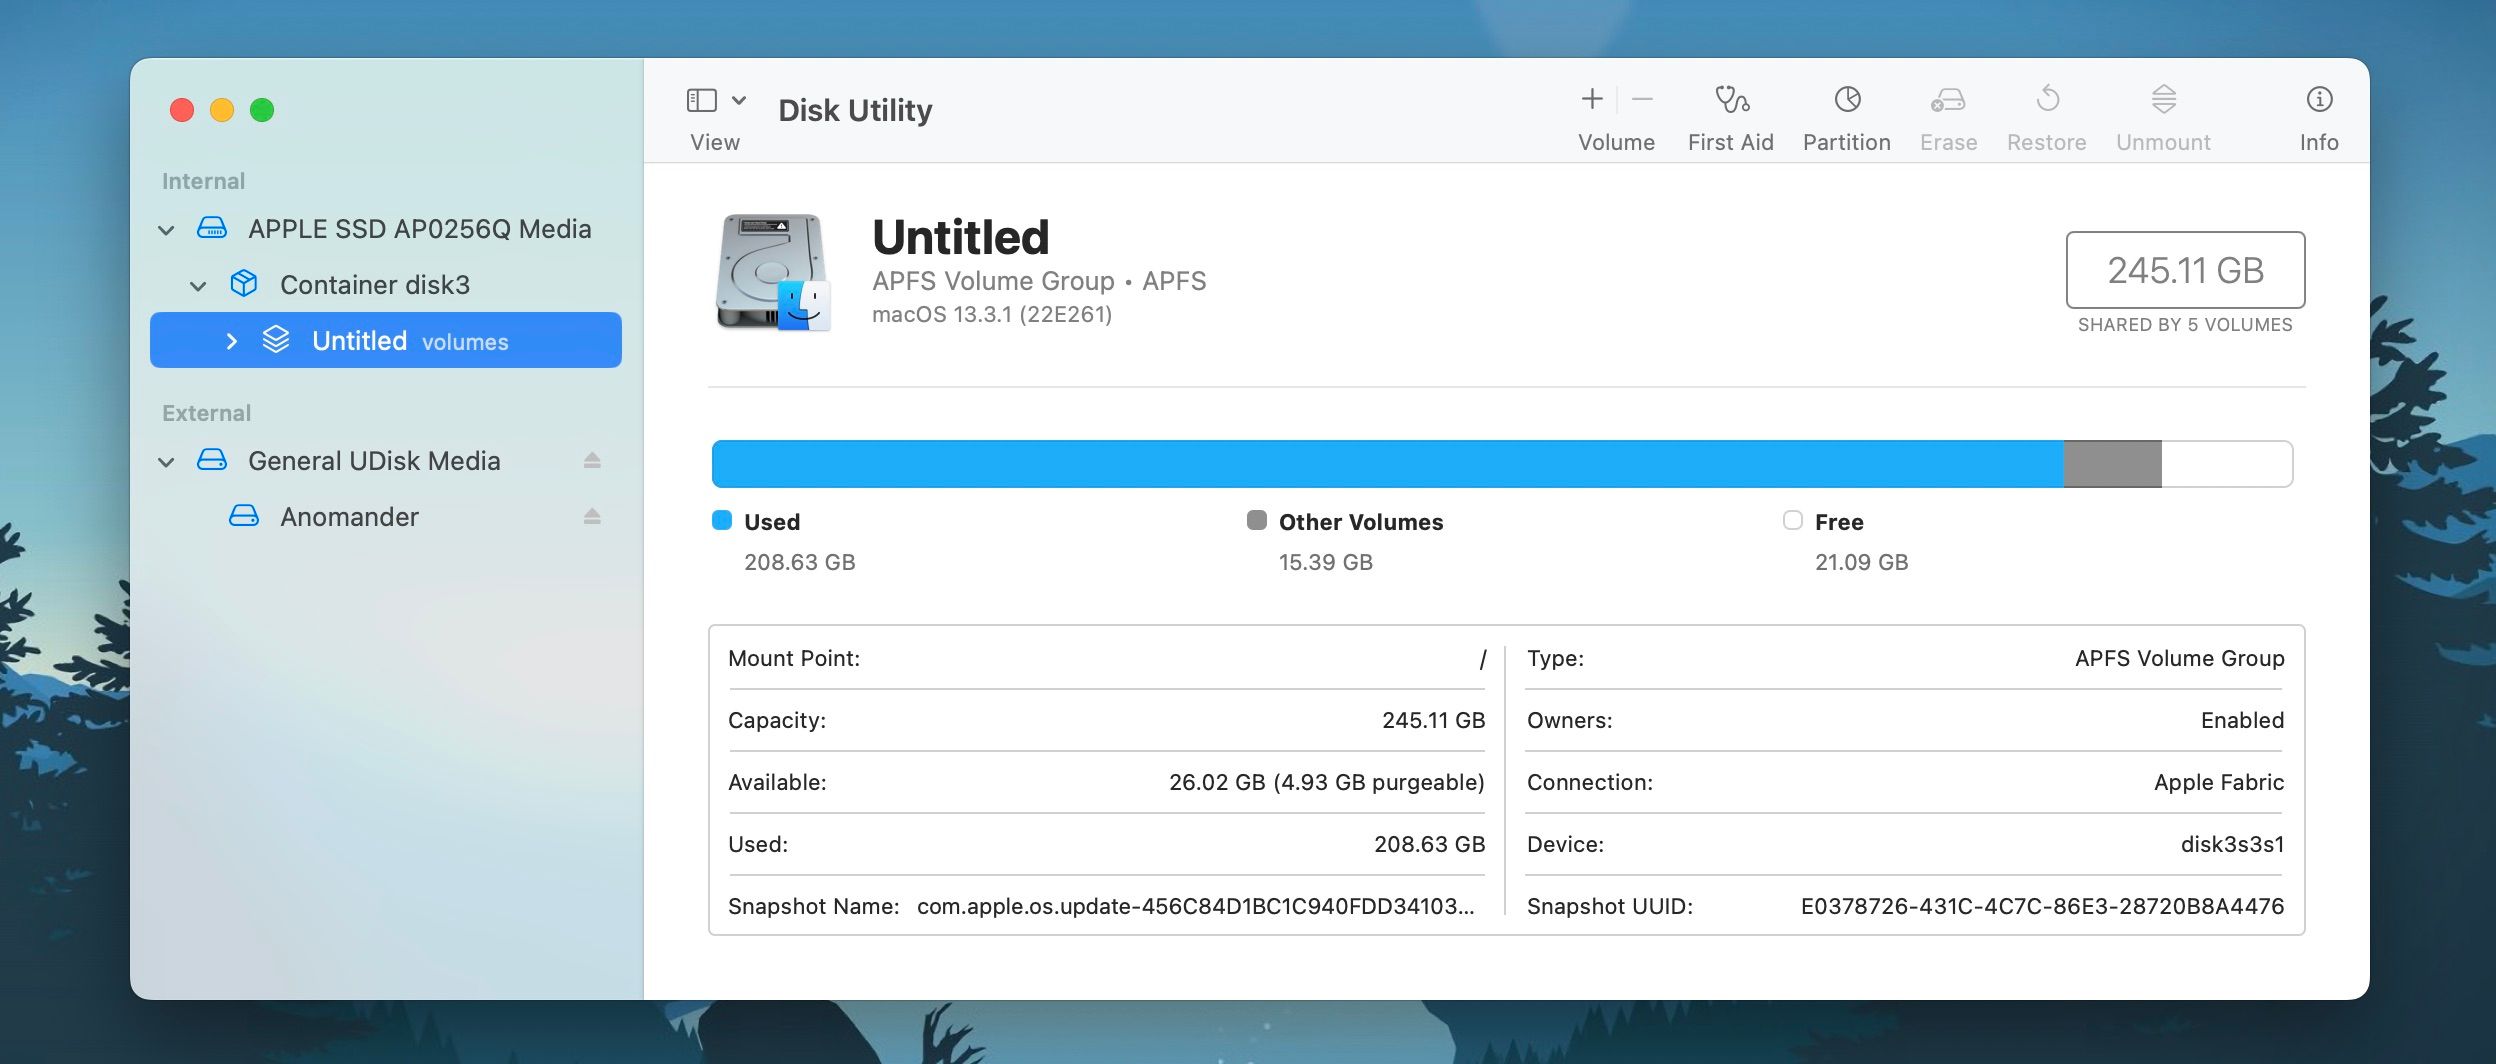 Disk Utility displaying internal drive's storage space